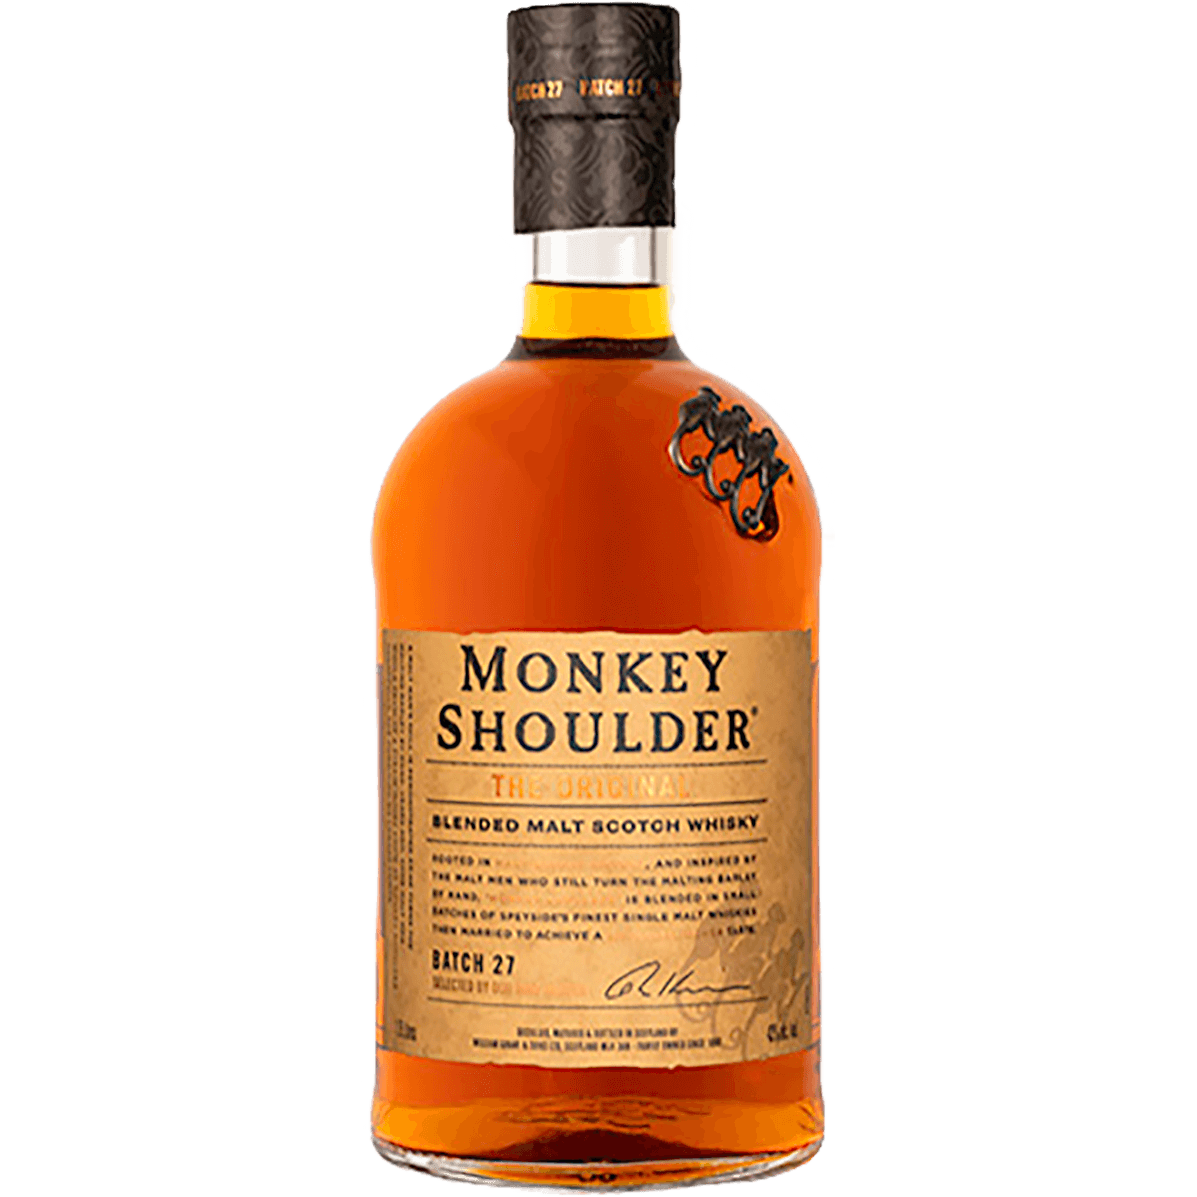 Monkey Shoulder: a versatile Blended Scotch Whisky - The Whisky Knights